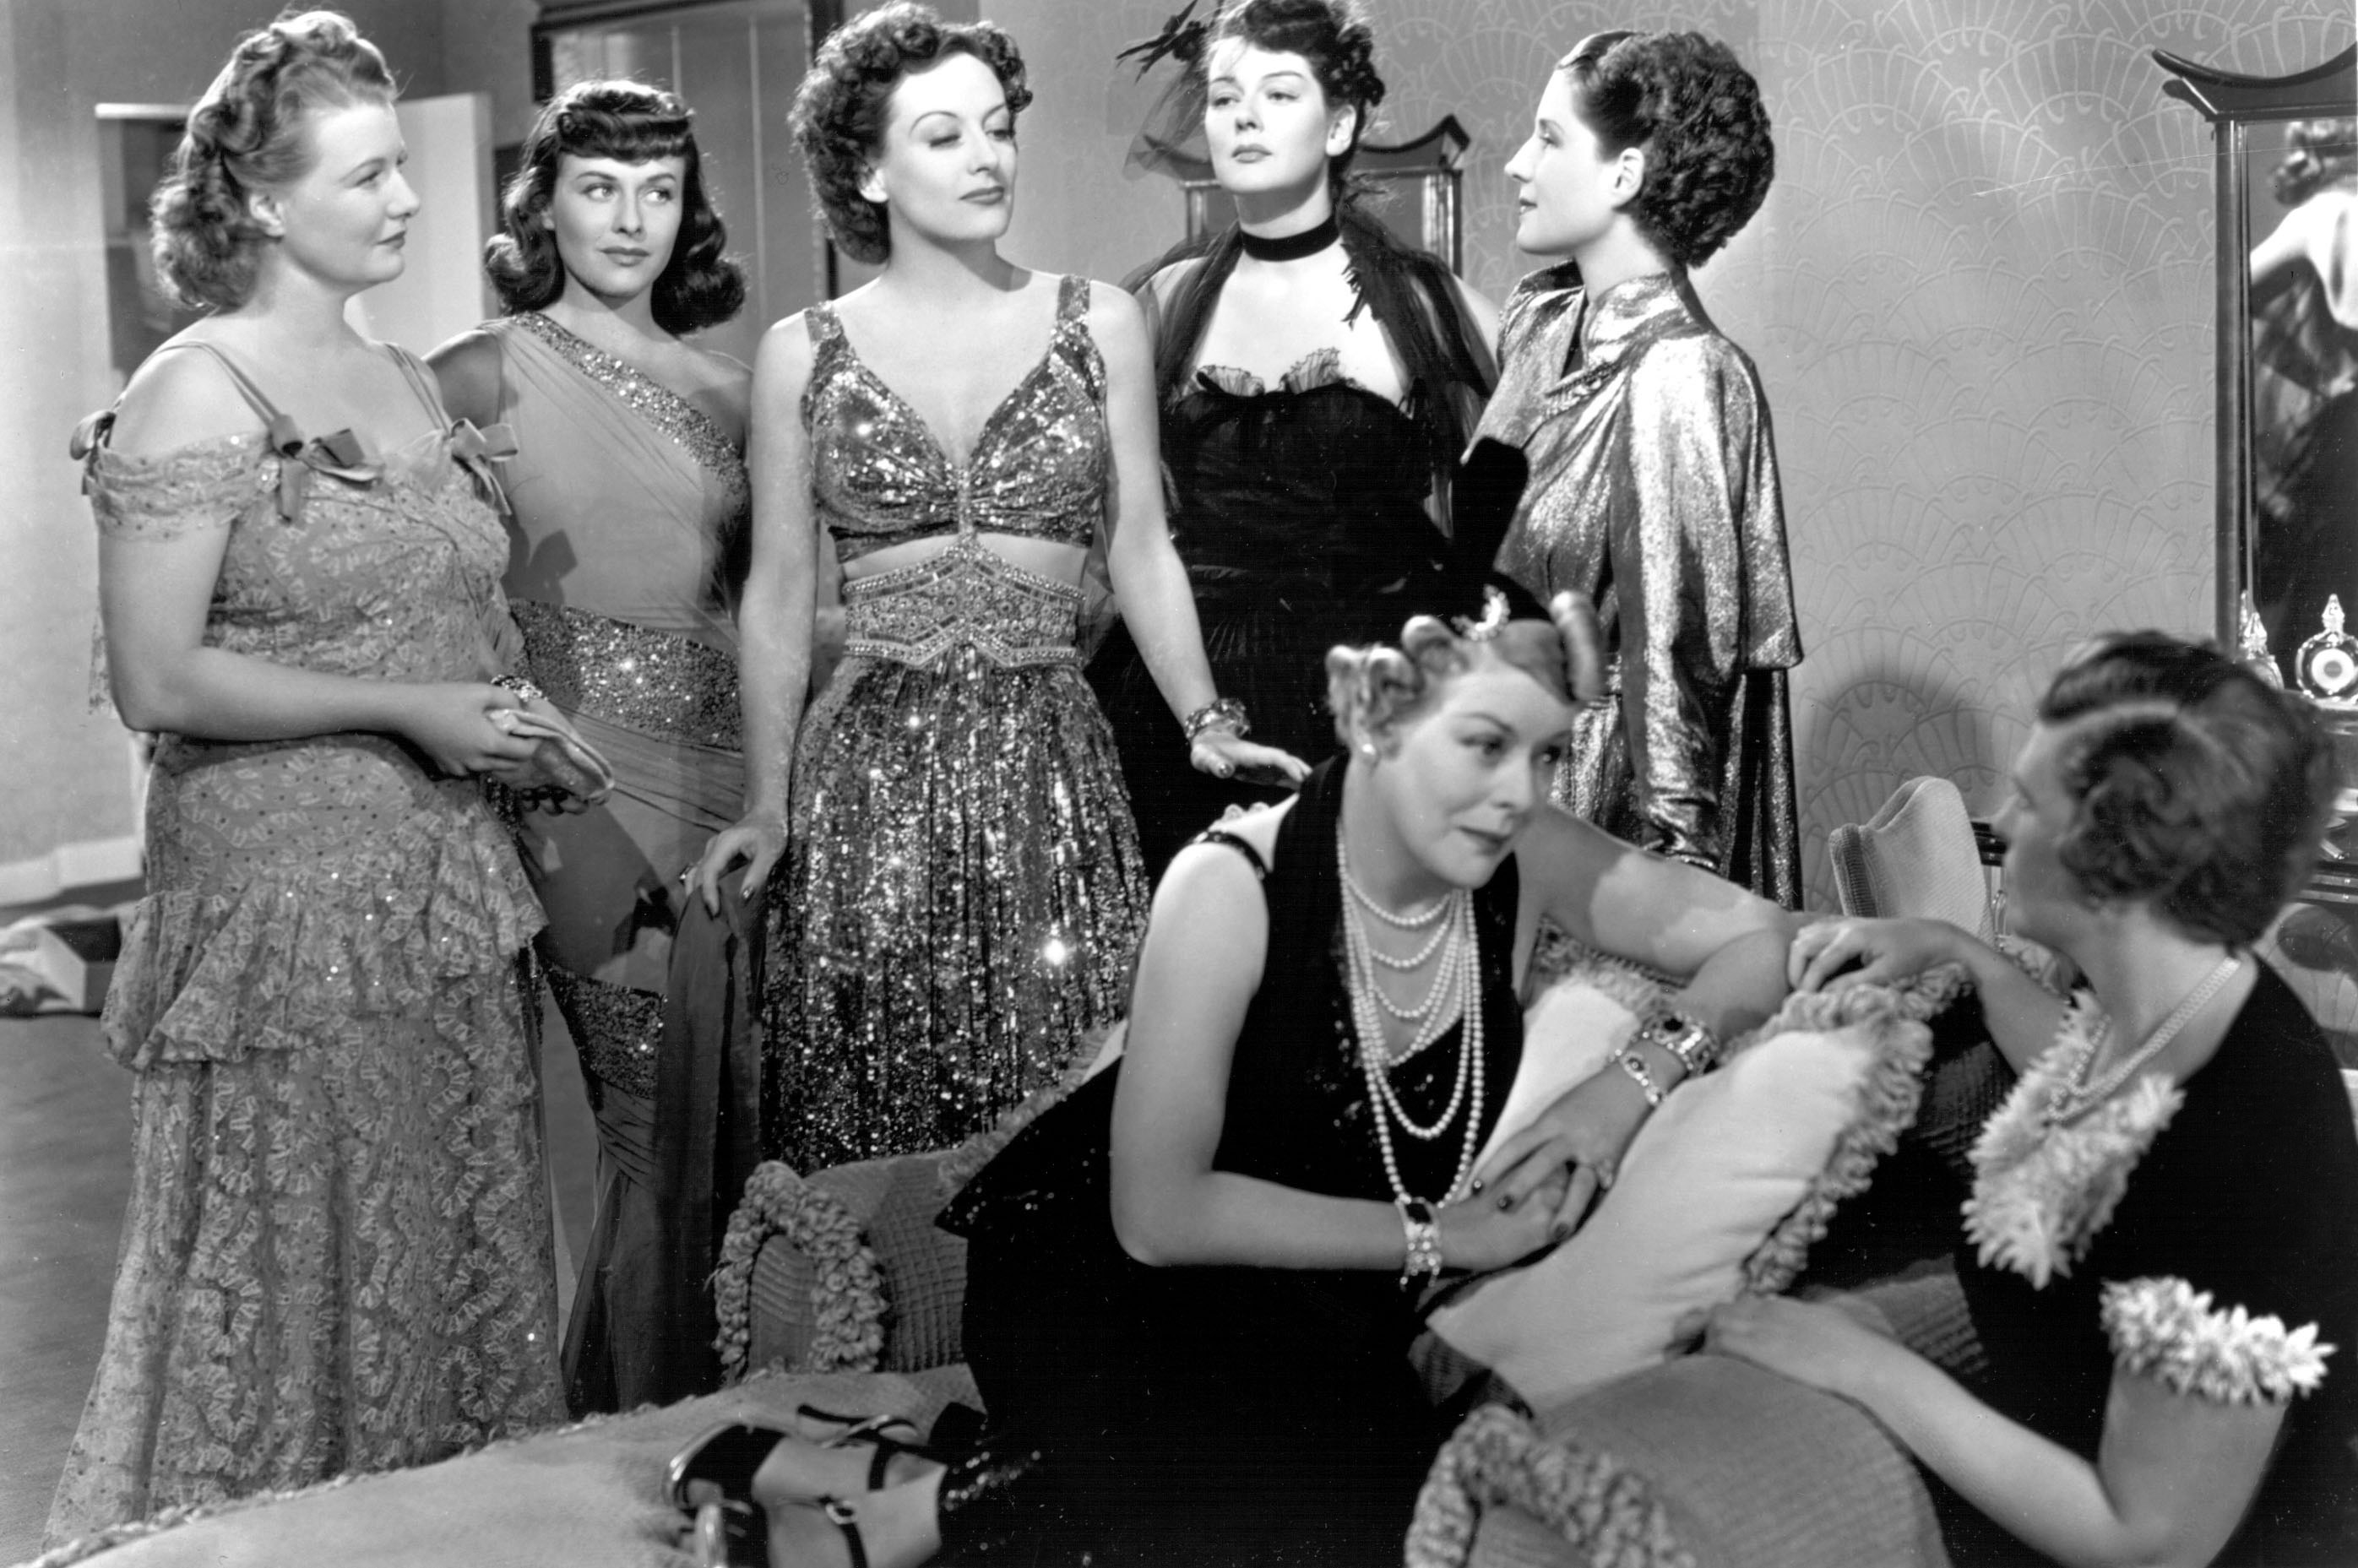 A group of gossiping women